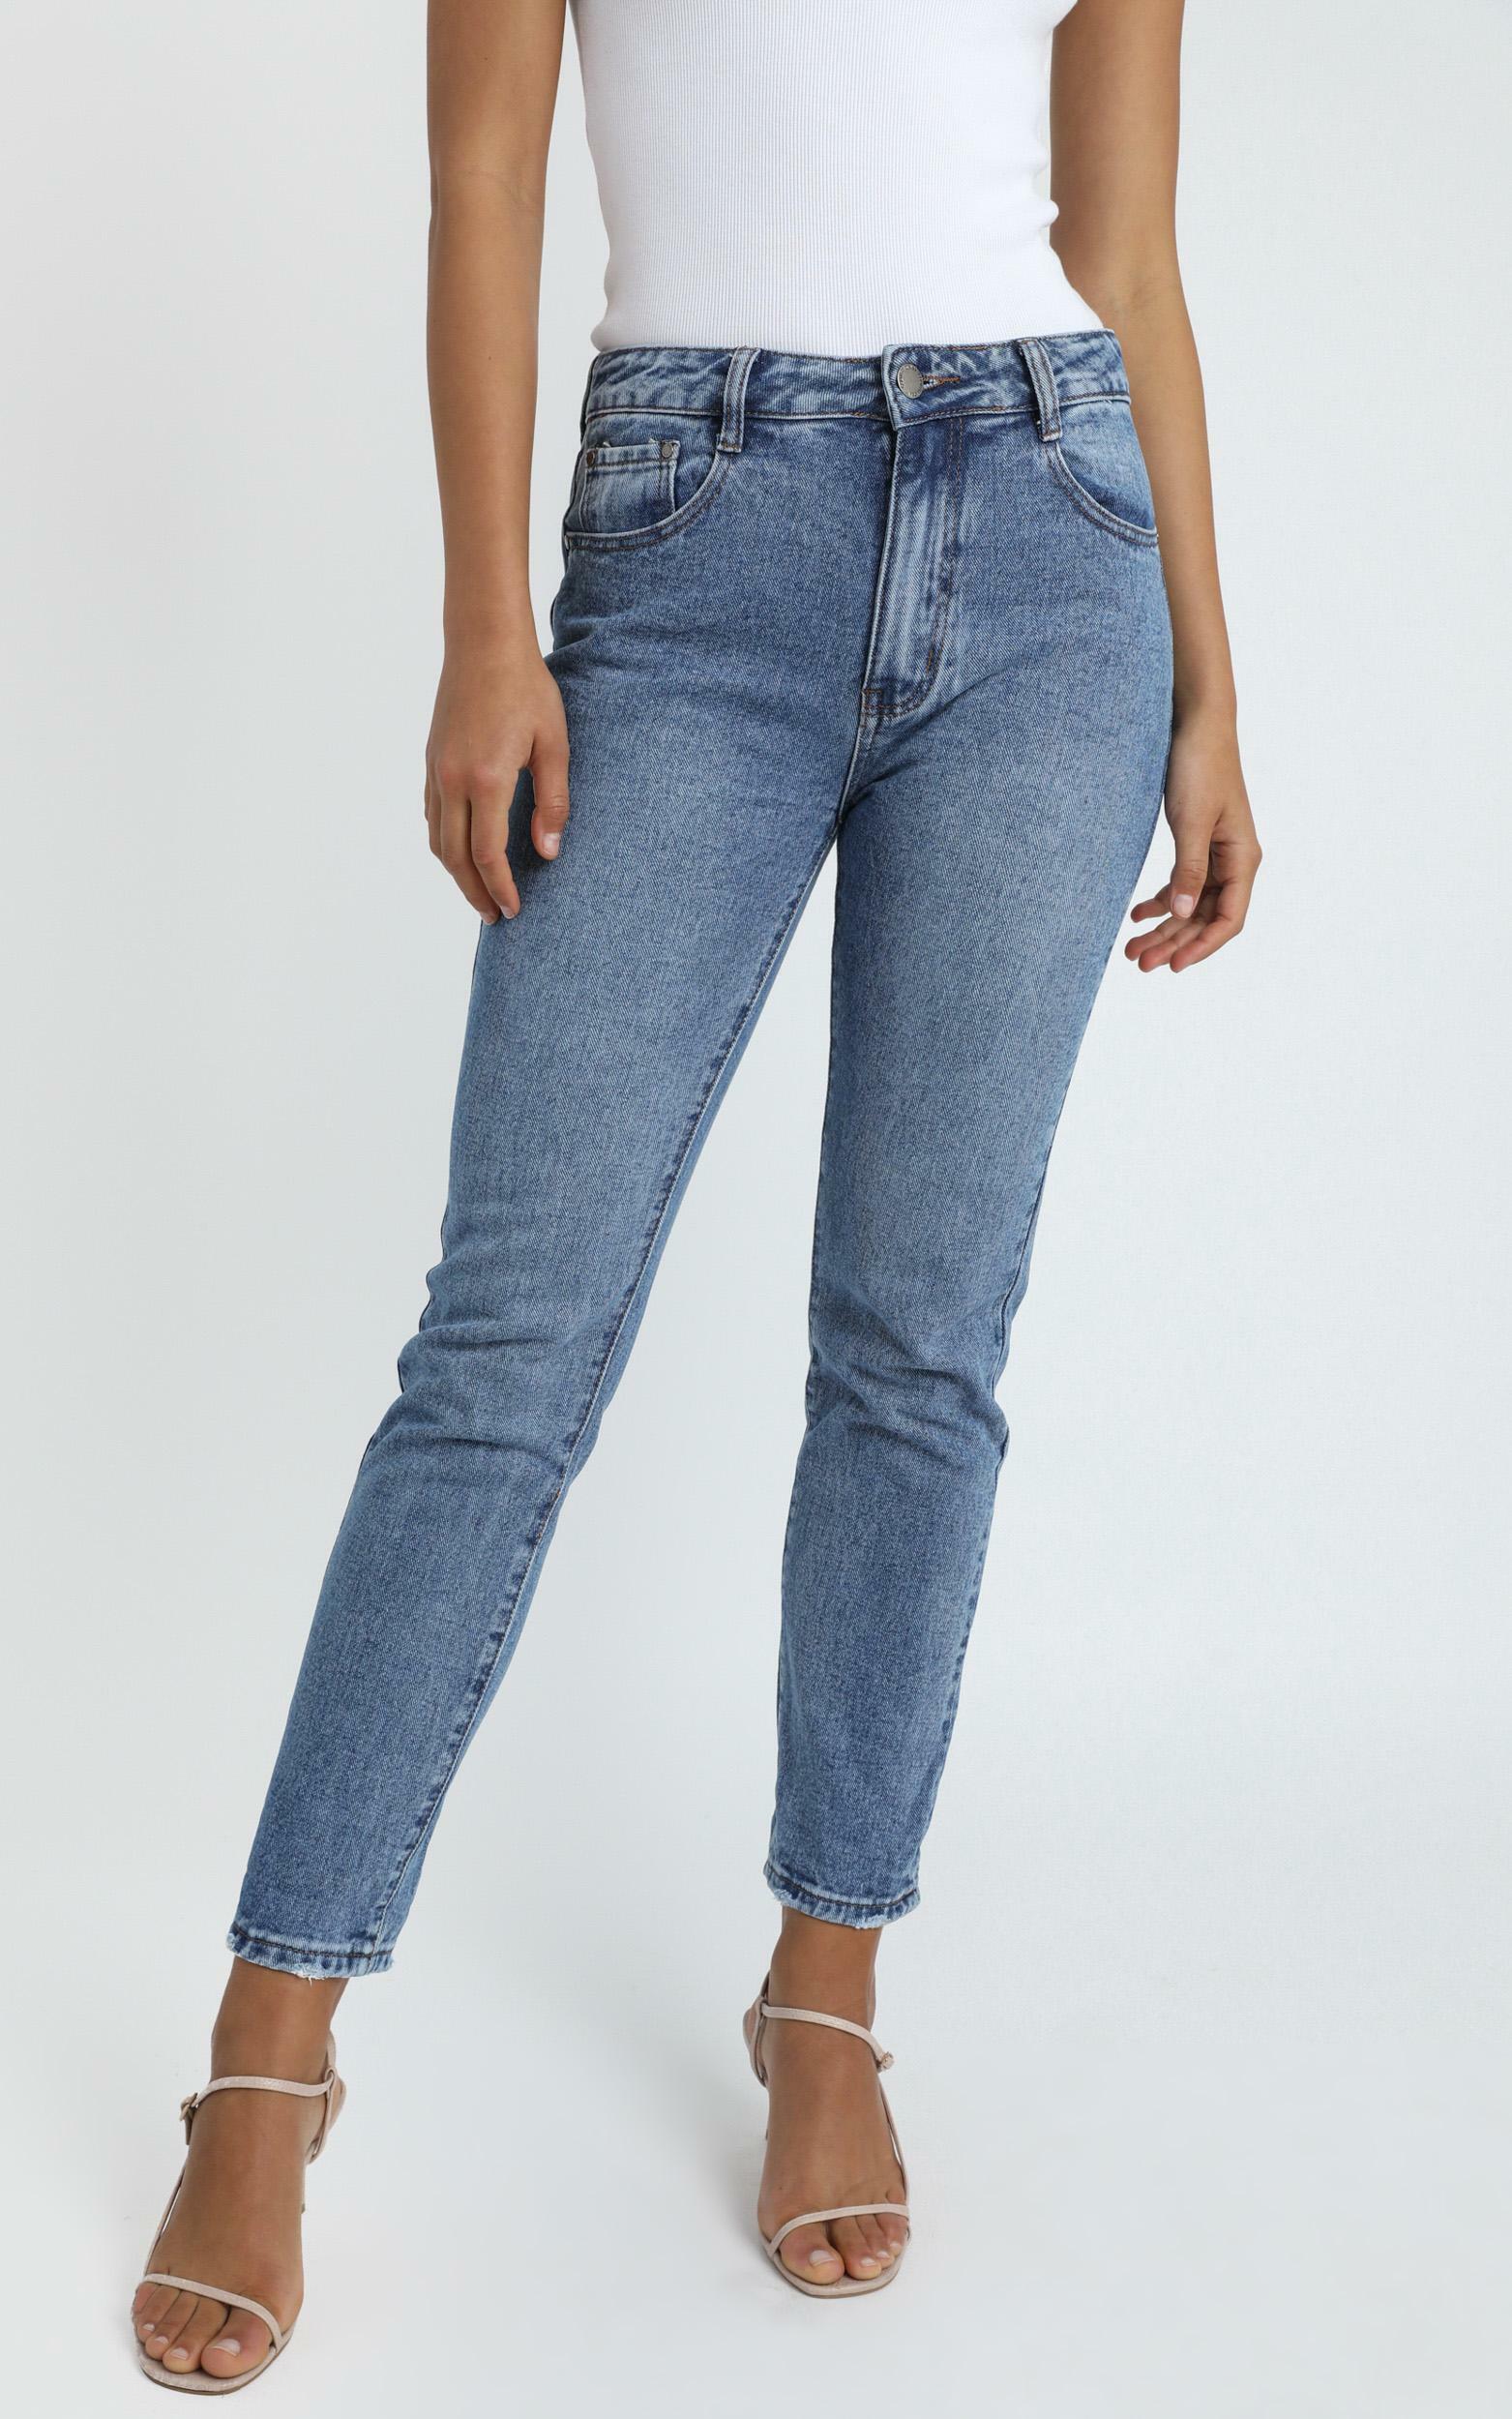 Remy Jeans in mid wash denim - 14 (XL), Blue, hi-res image number null